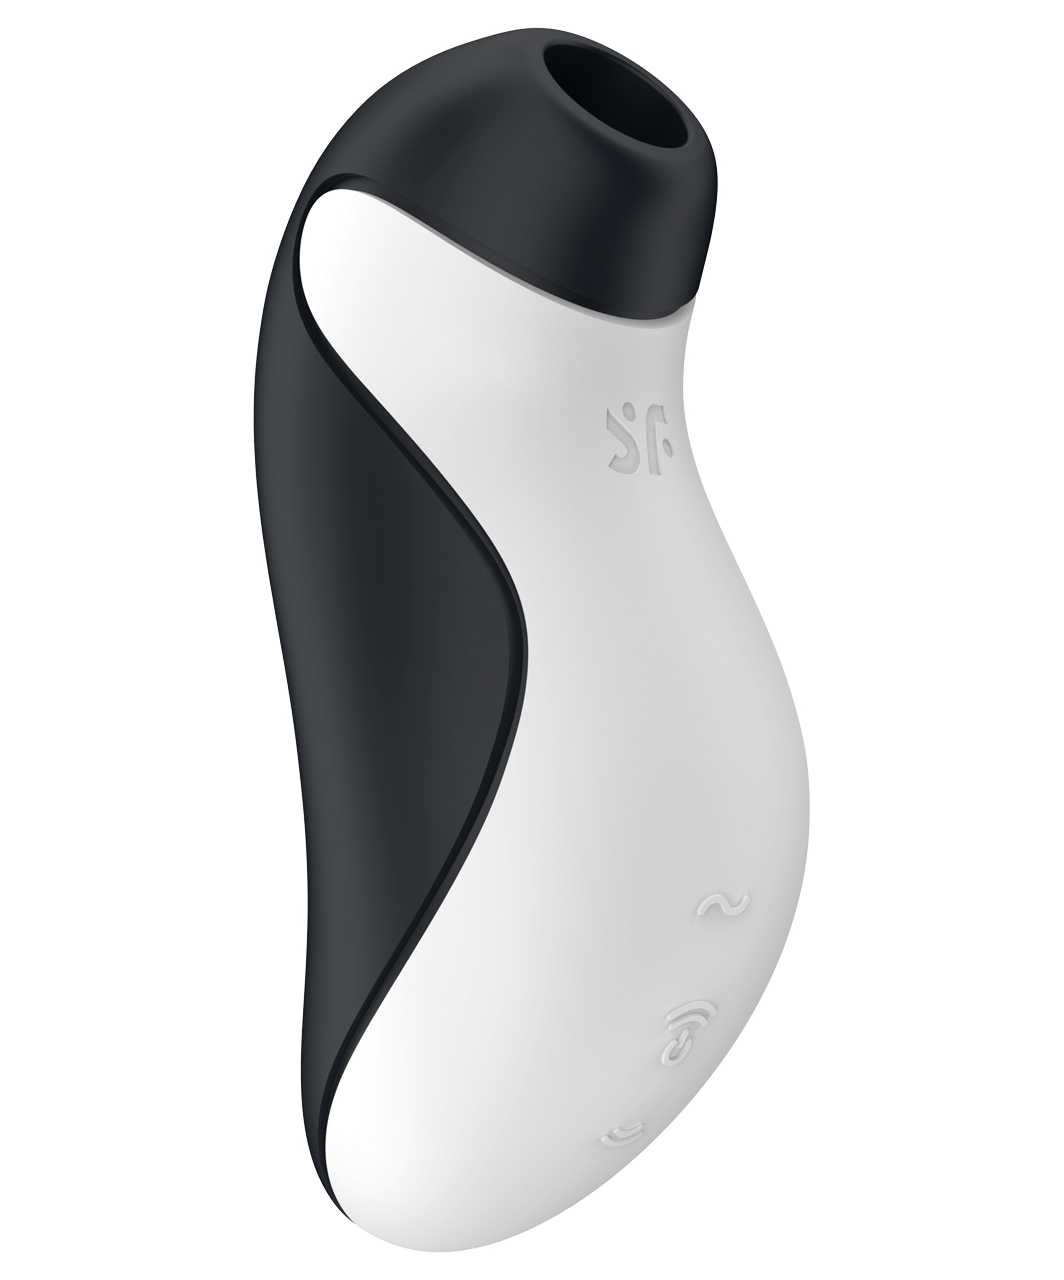 Satisfyer Orca Air Pulse clitoral stimulator